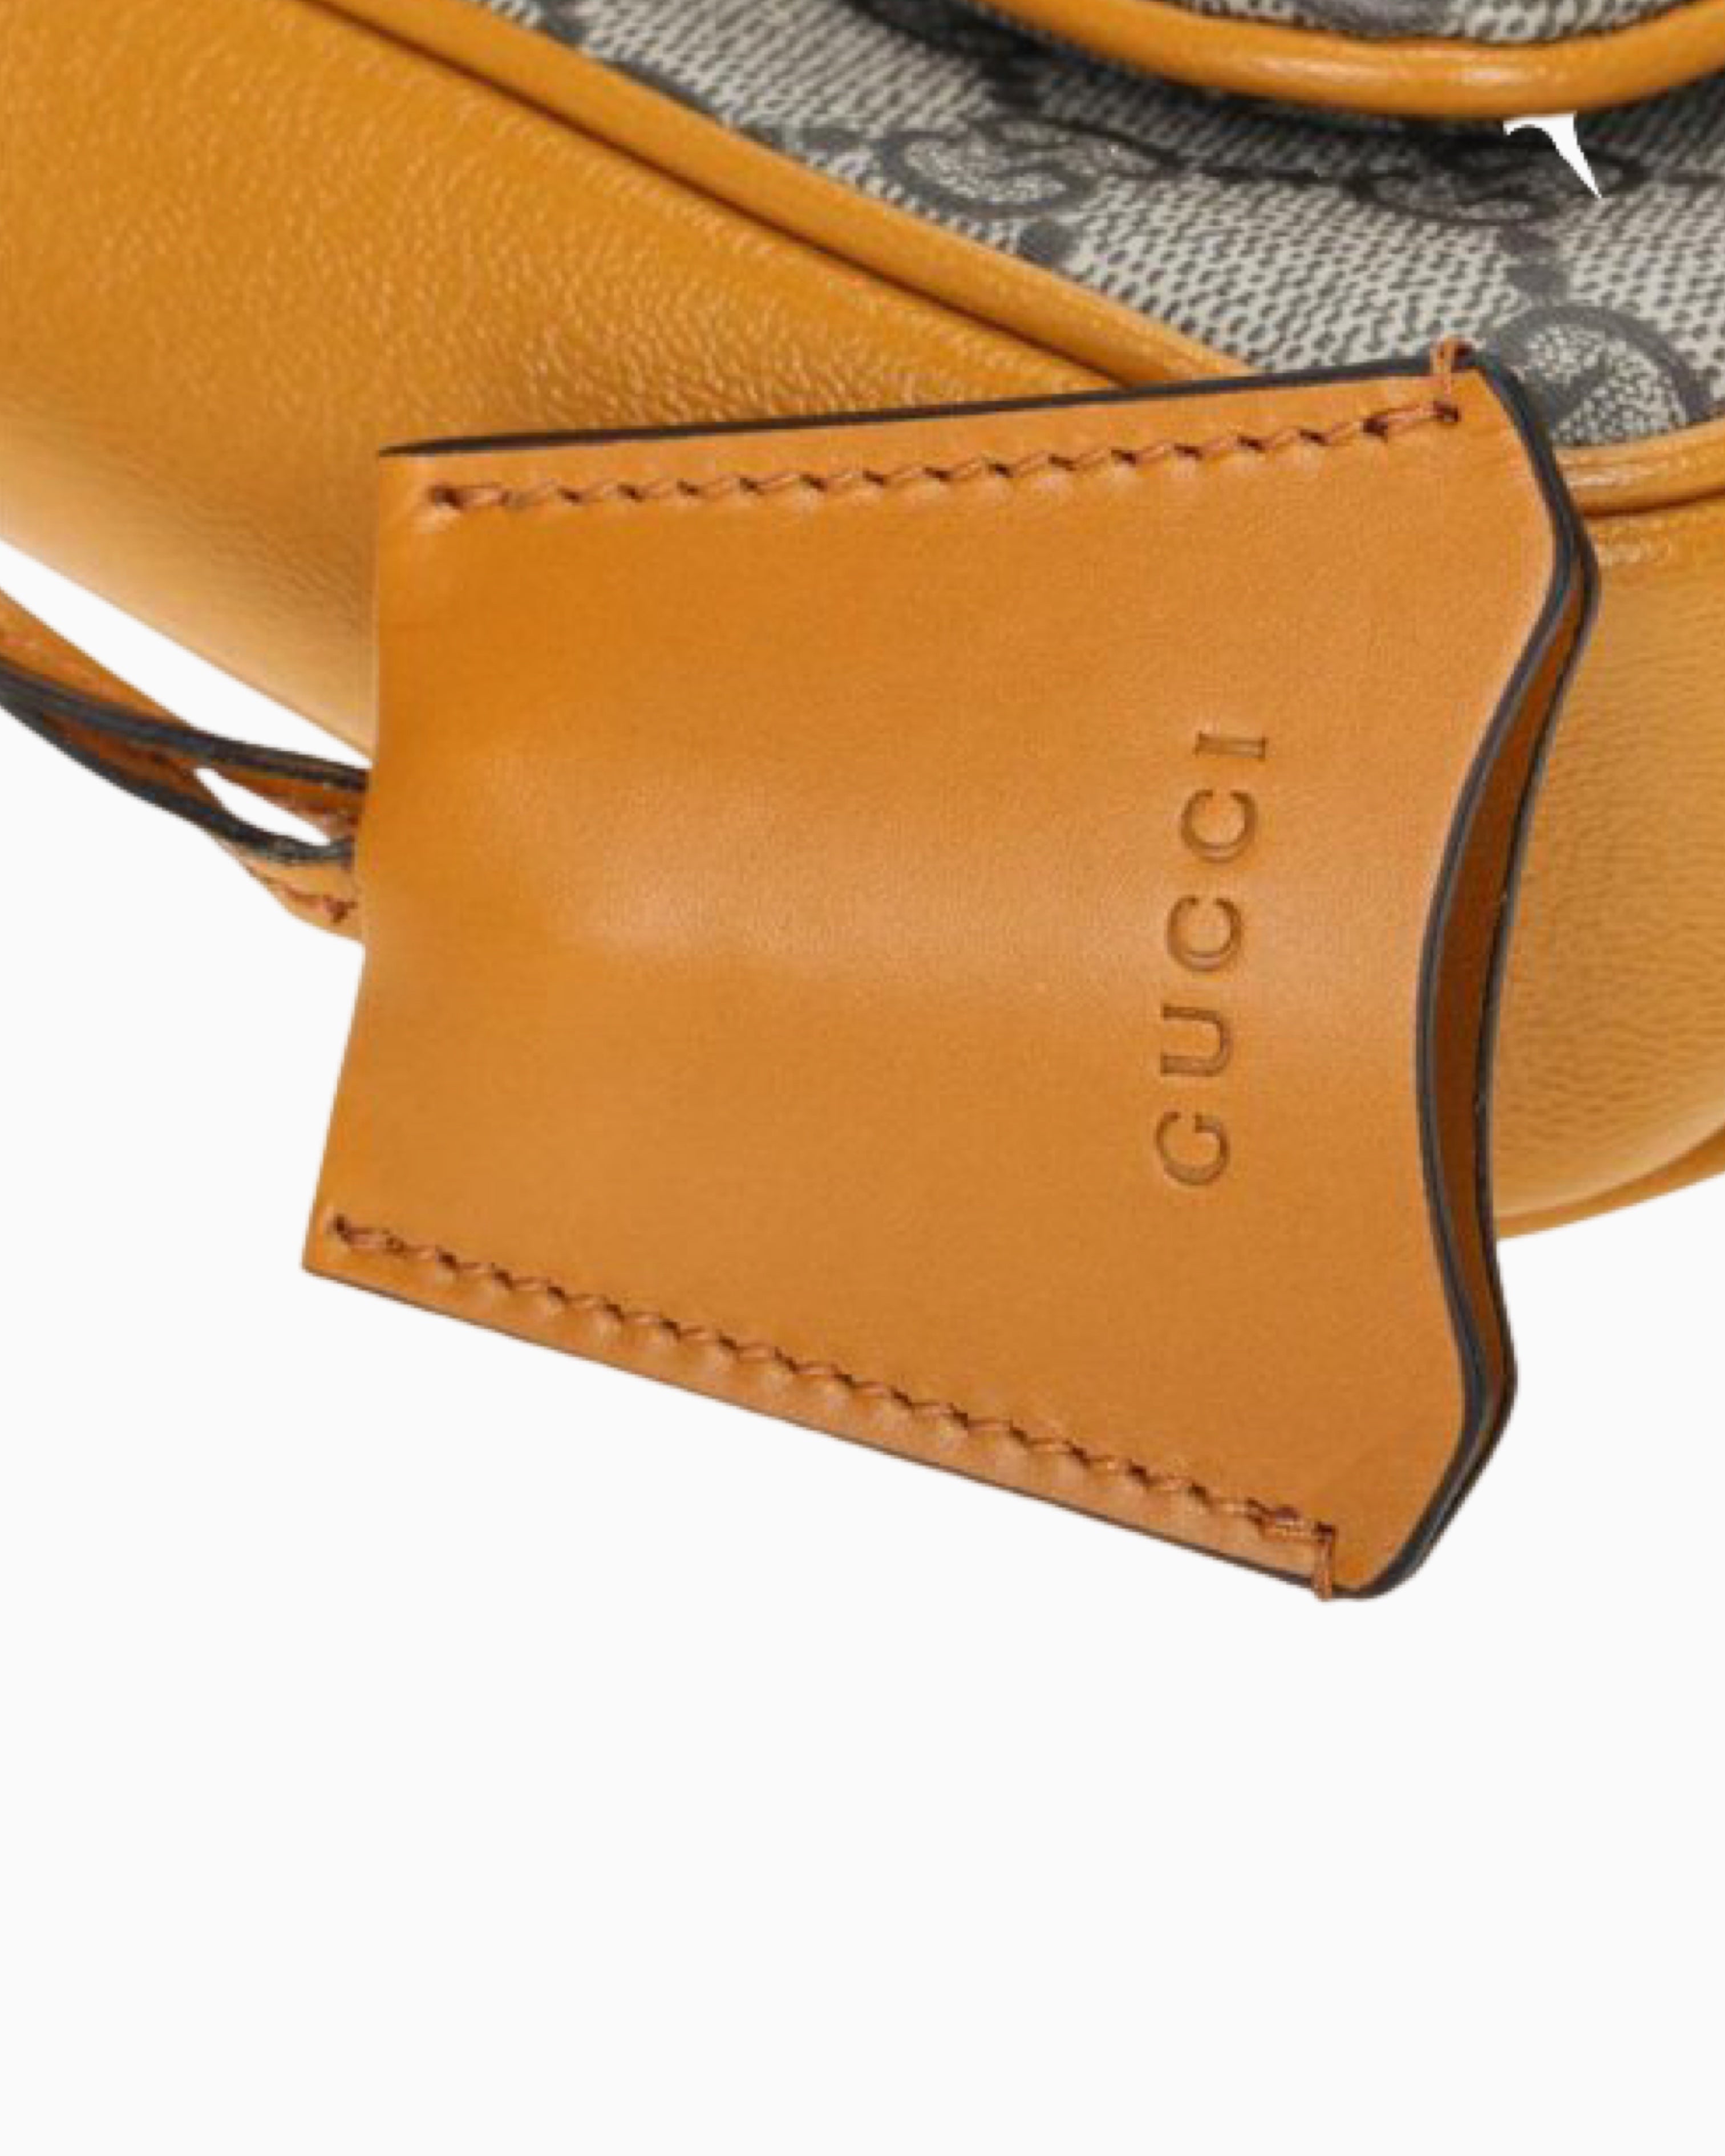 $1,750, Gucci Small Padlock Gg Supreme Canvas Leather Shoulder Bag